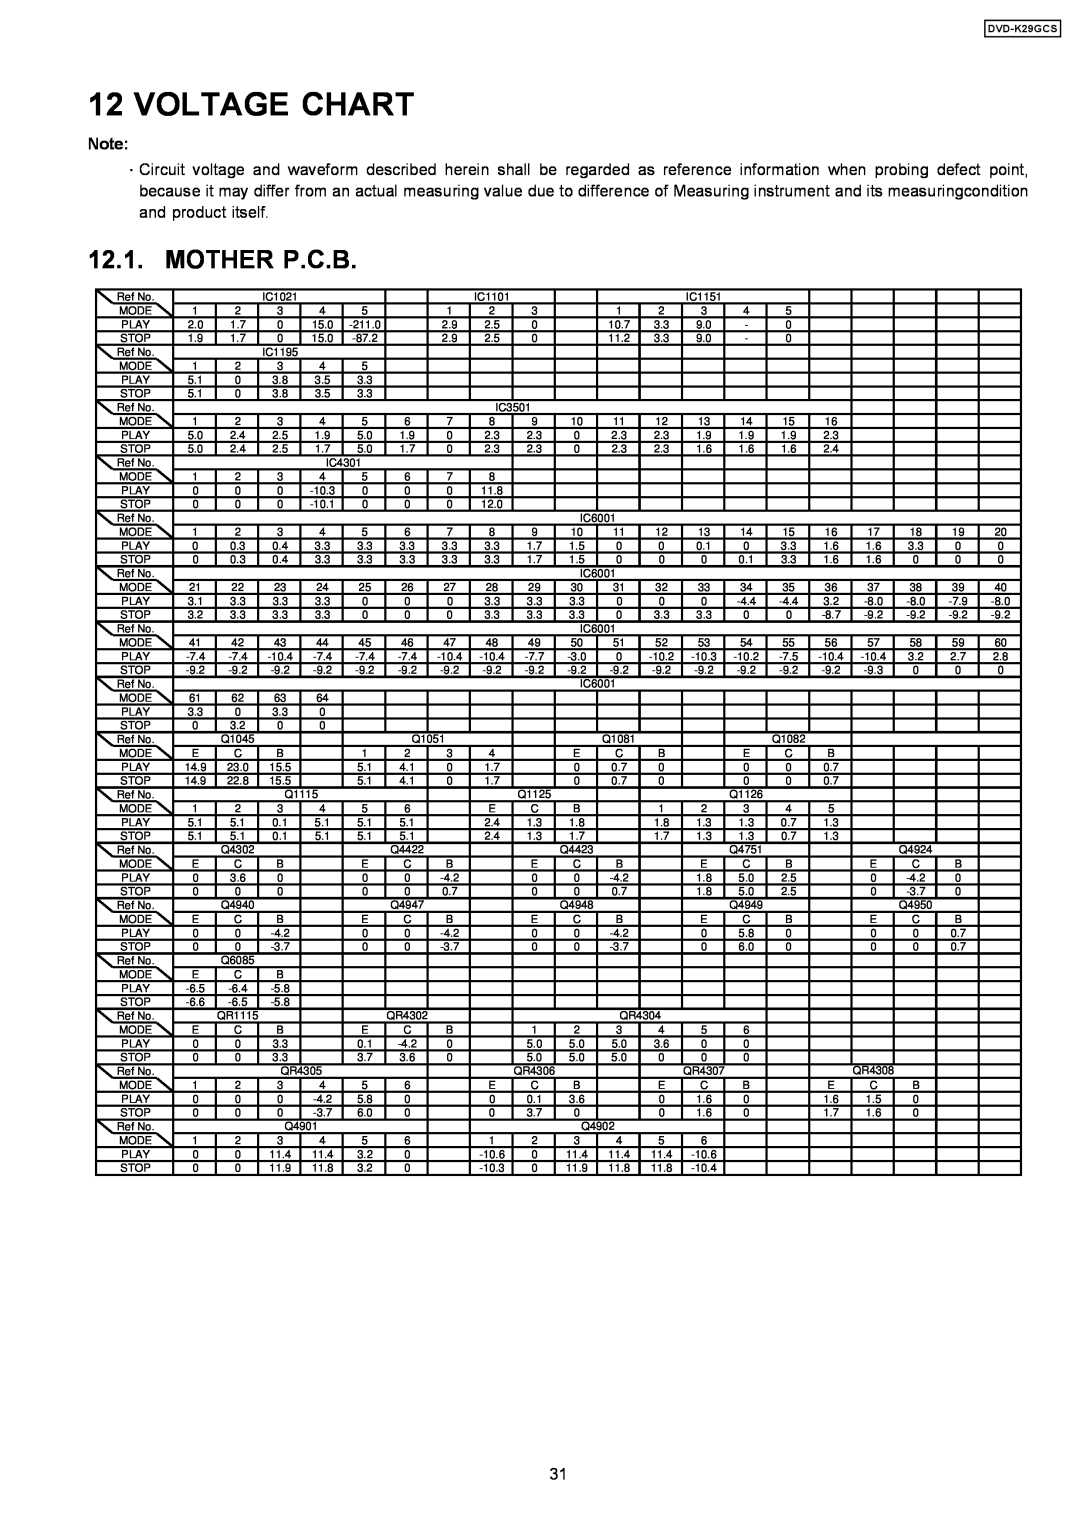 Panasonic DVD-K29GCS specifications Voltage Chart, Mother P.C.B, 12.1 